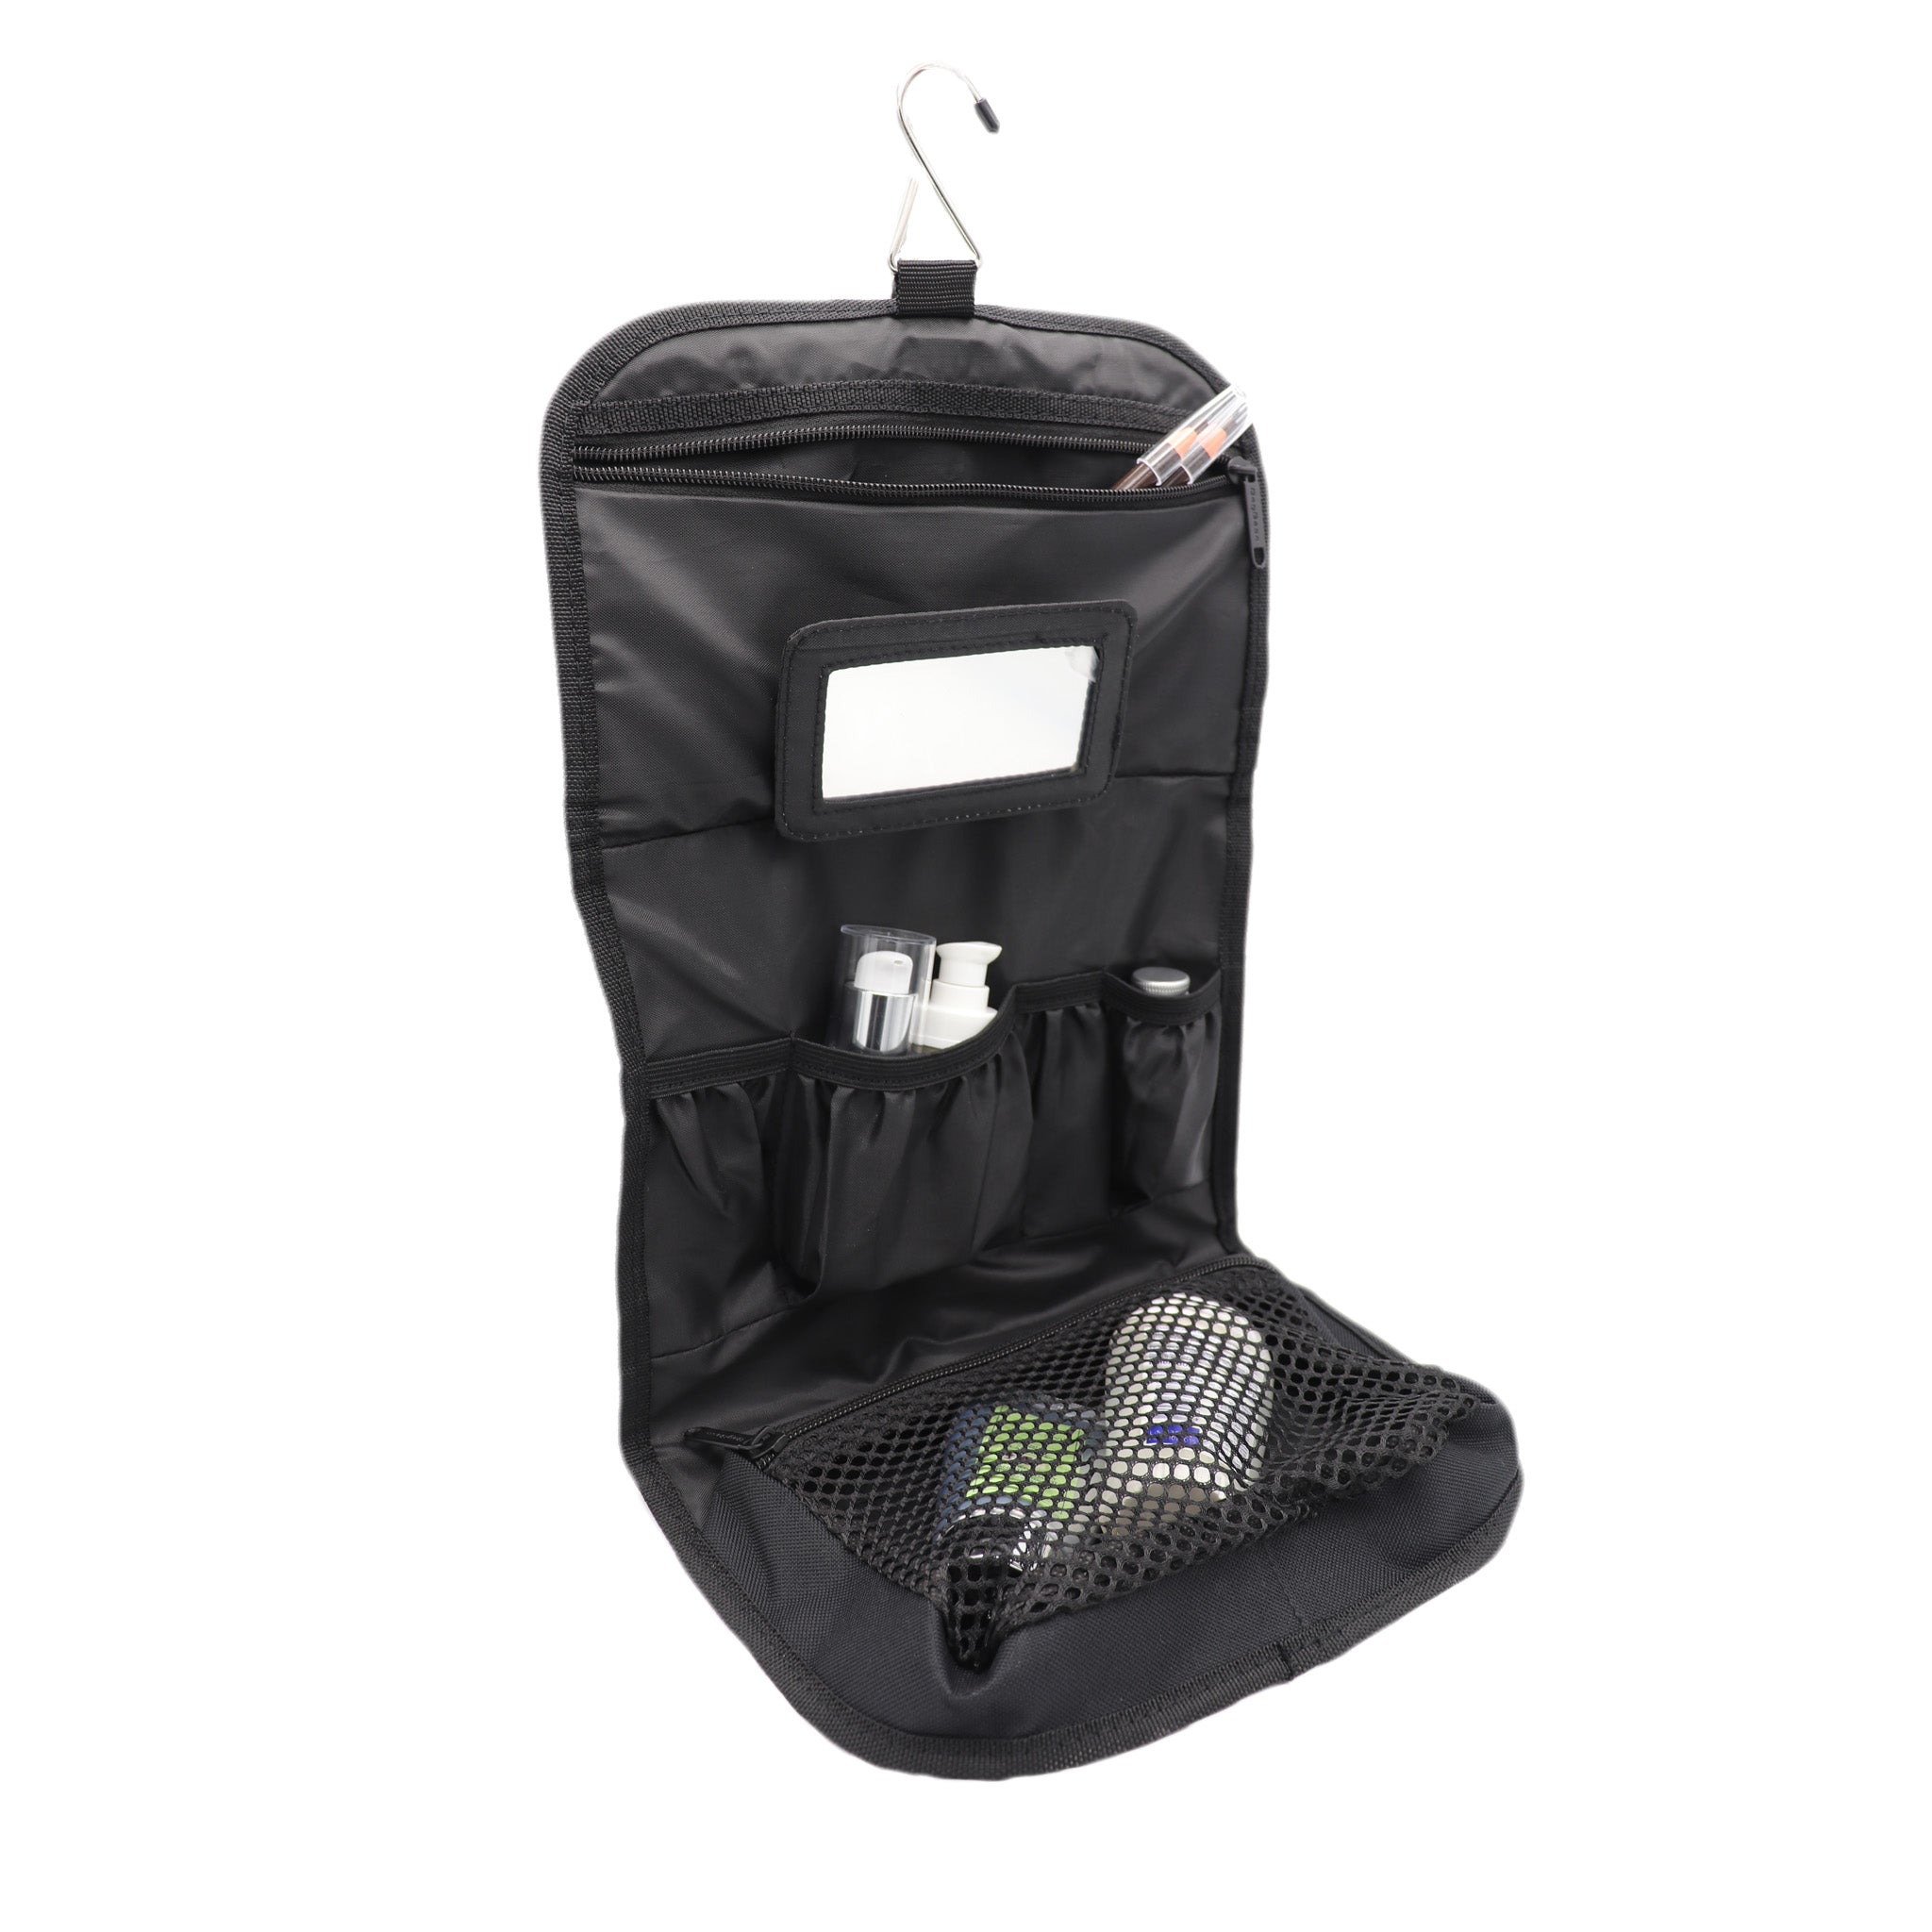 Handy - Travel Wash Bag / Cosmetic Bag